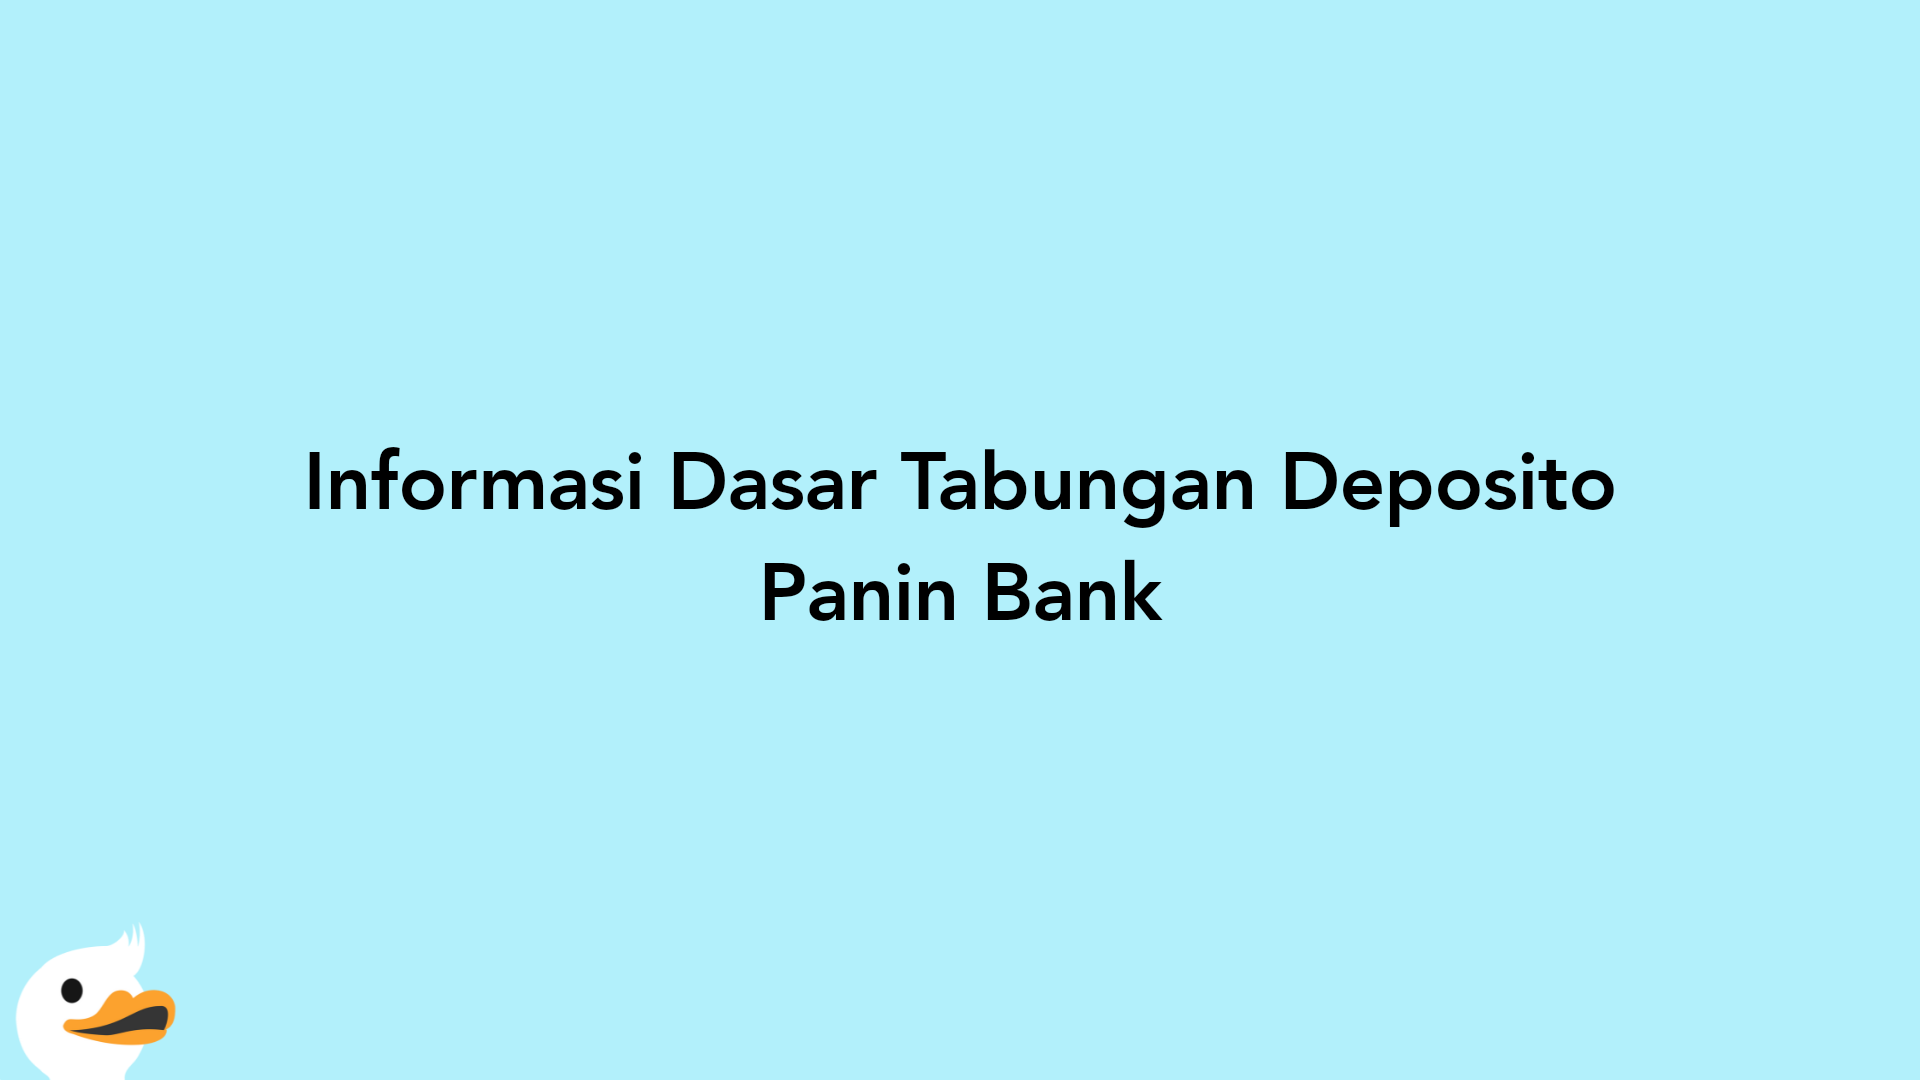 Informasi Dasar Tabungan Deposito Panin Bank